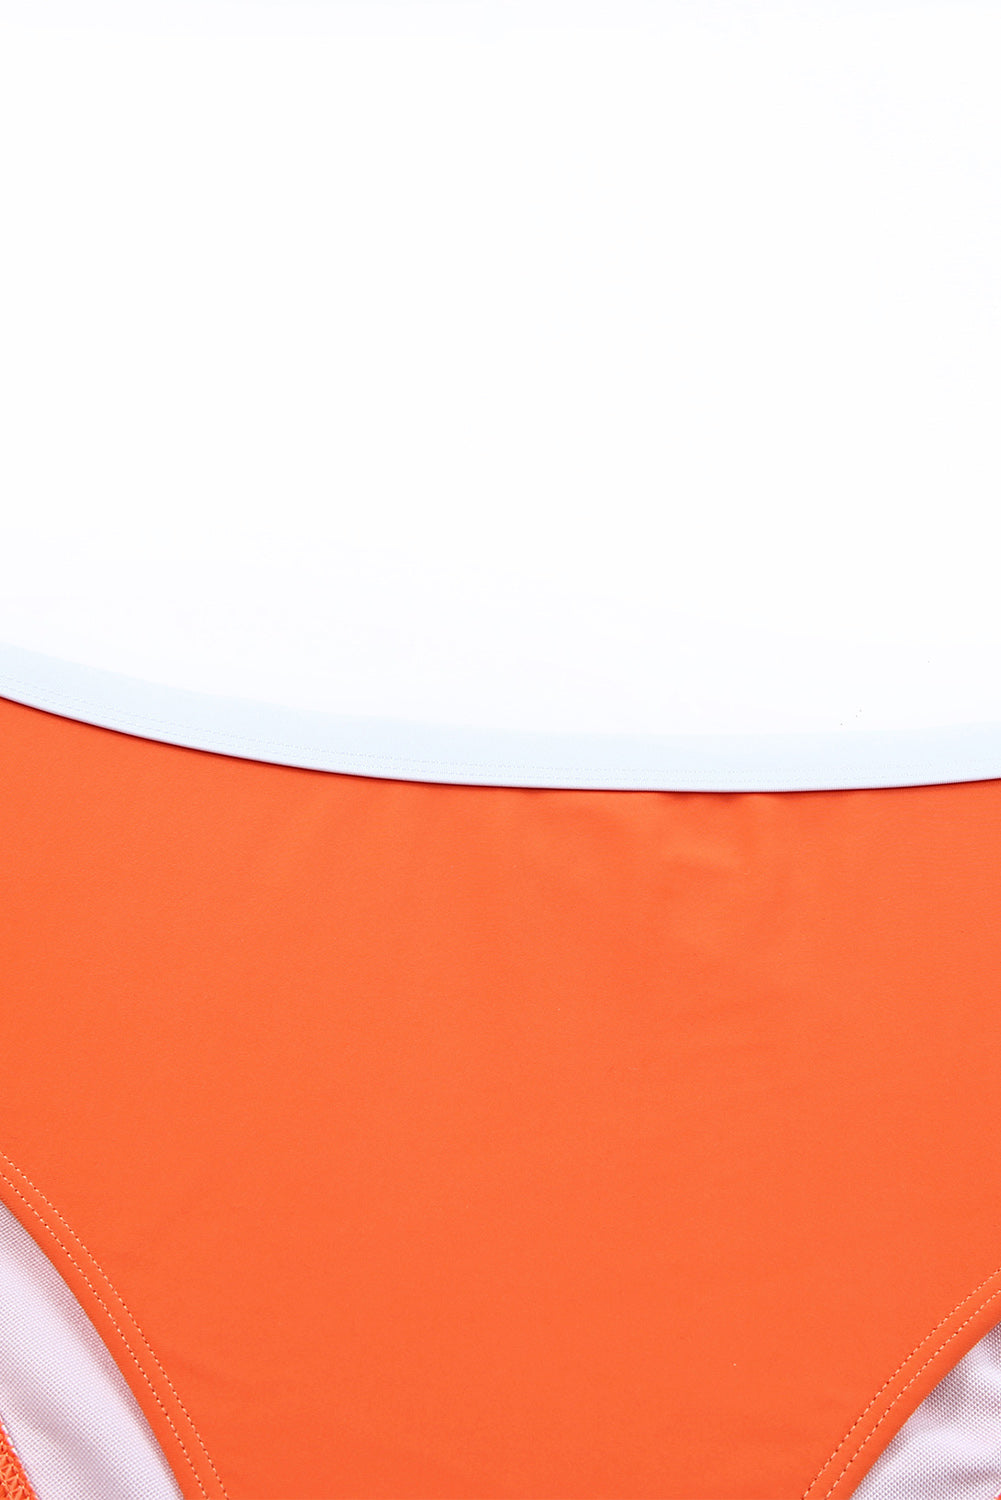 Cali Chic Women's Swimsuit Celebrity Orange Color Block Zipped Cut Out Bikini